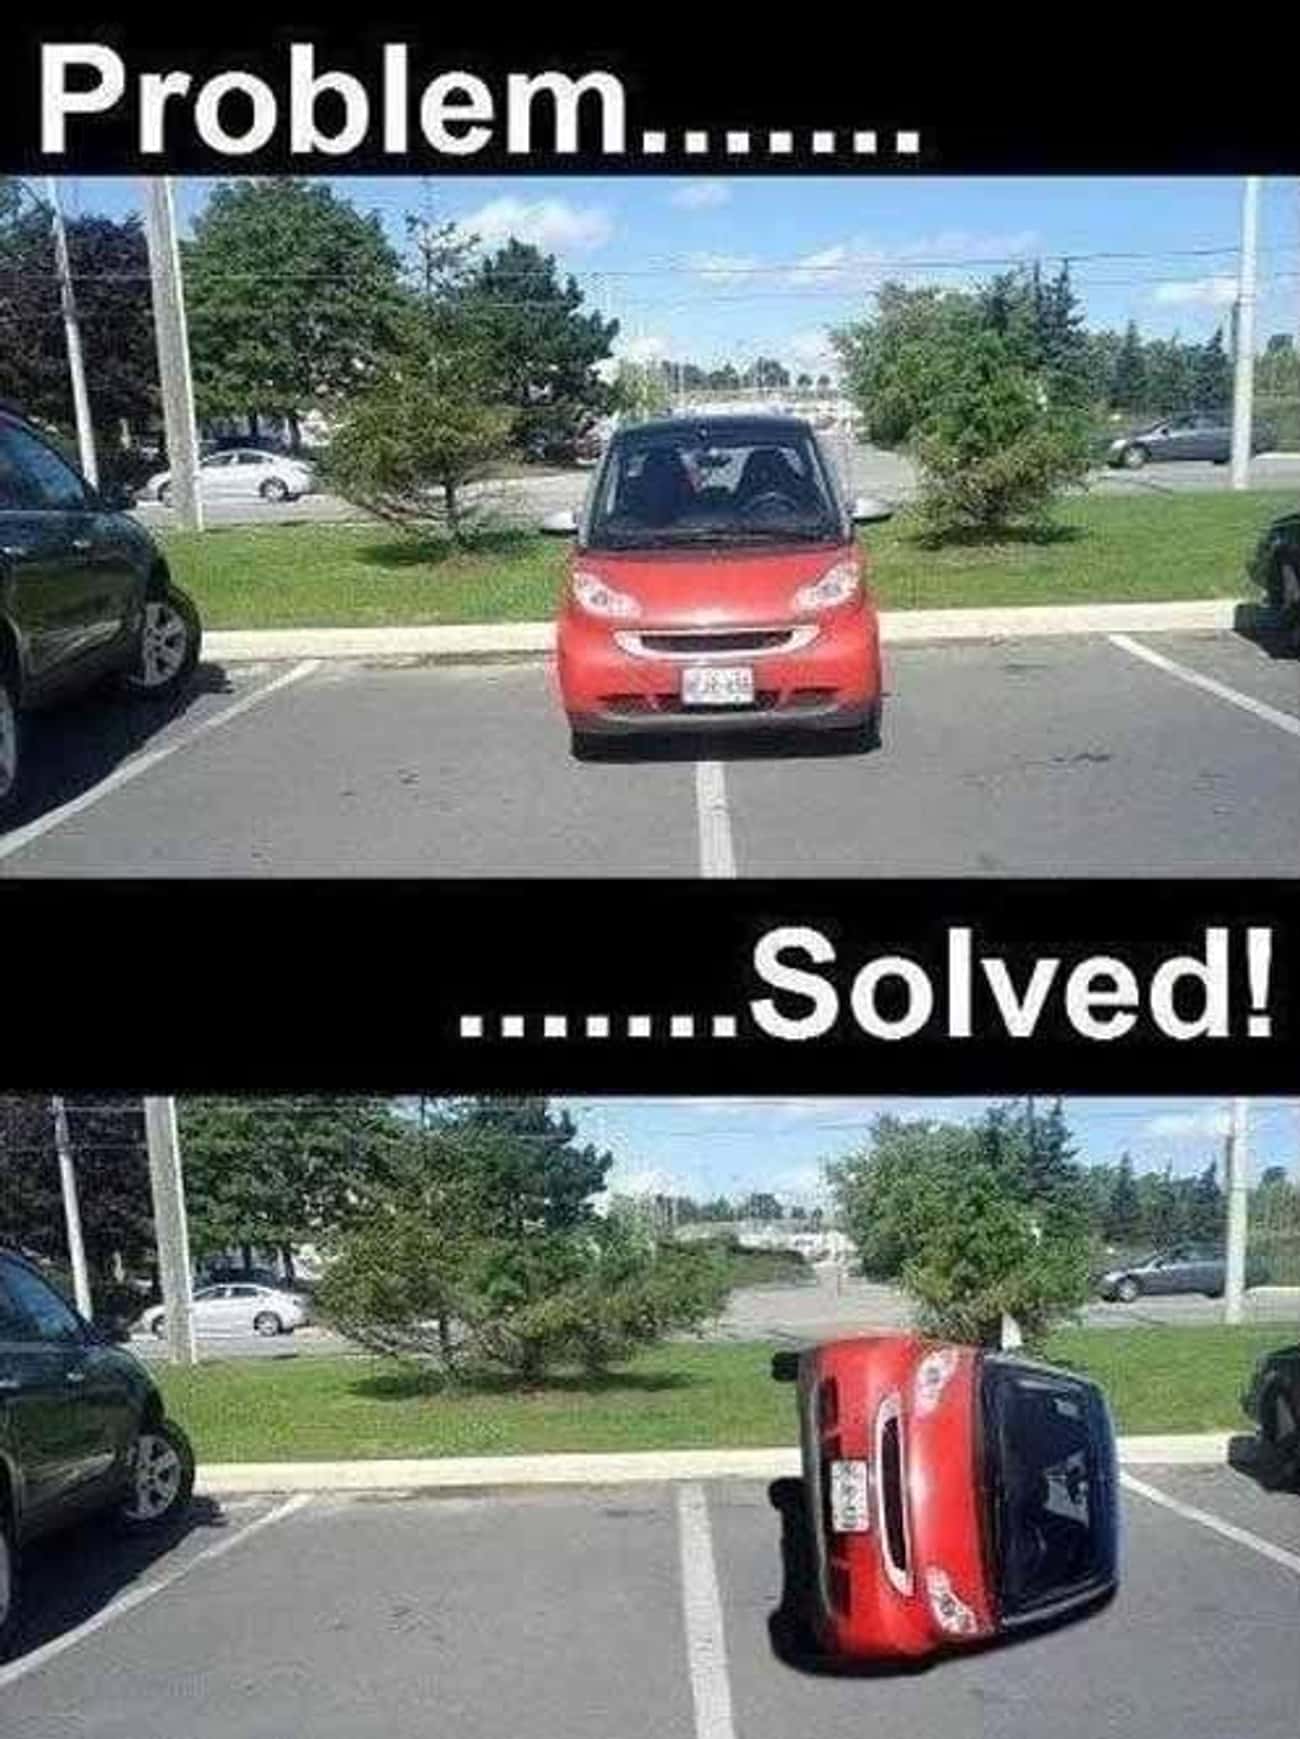 problem solved.jpg